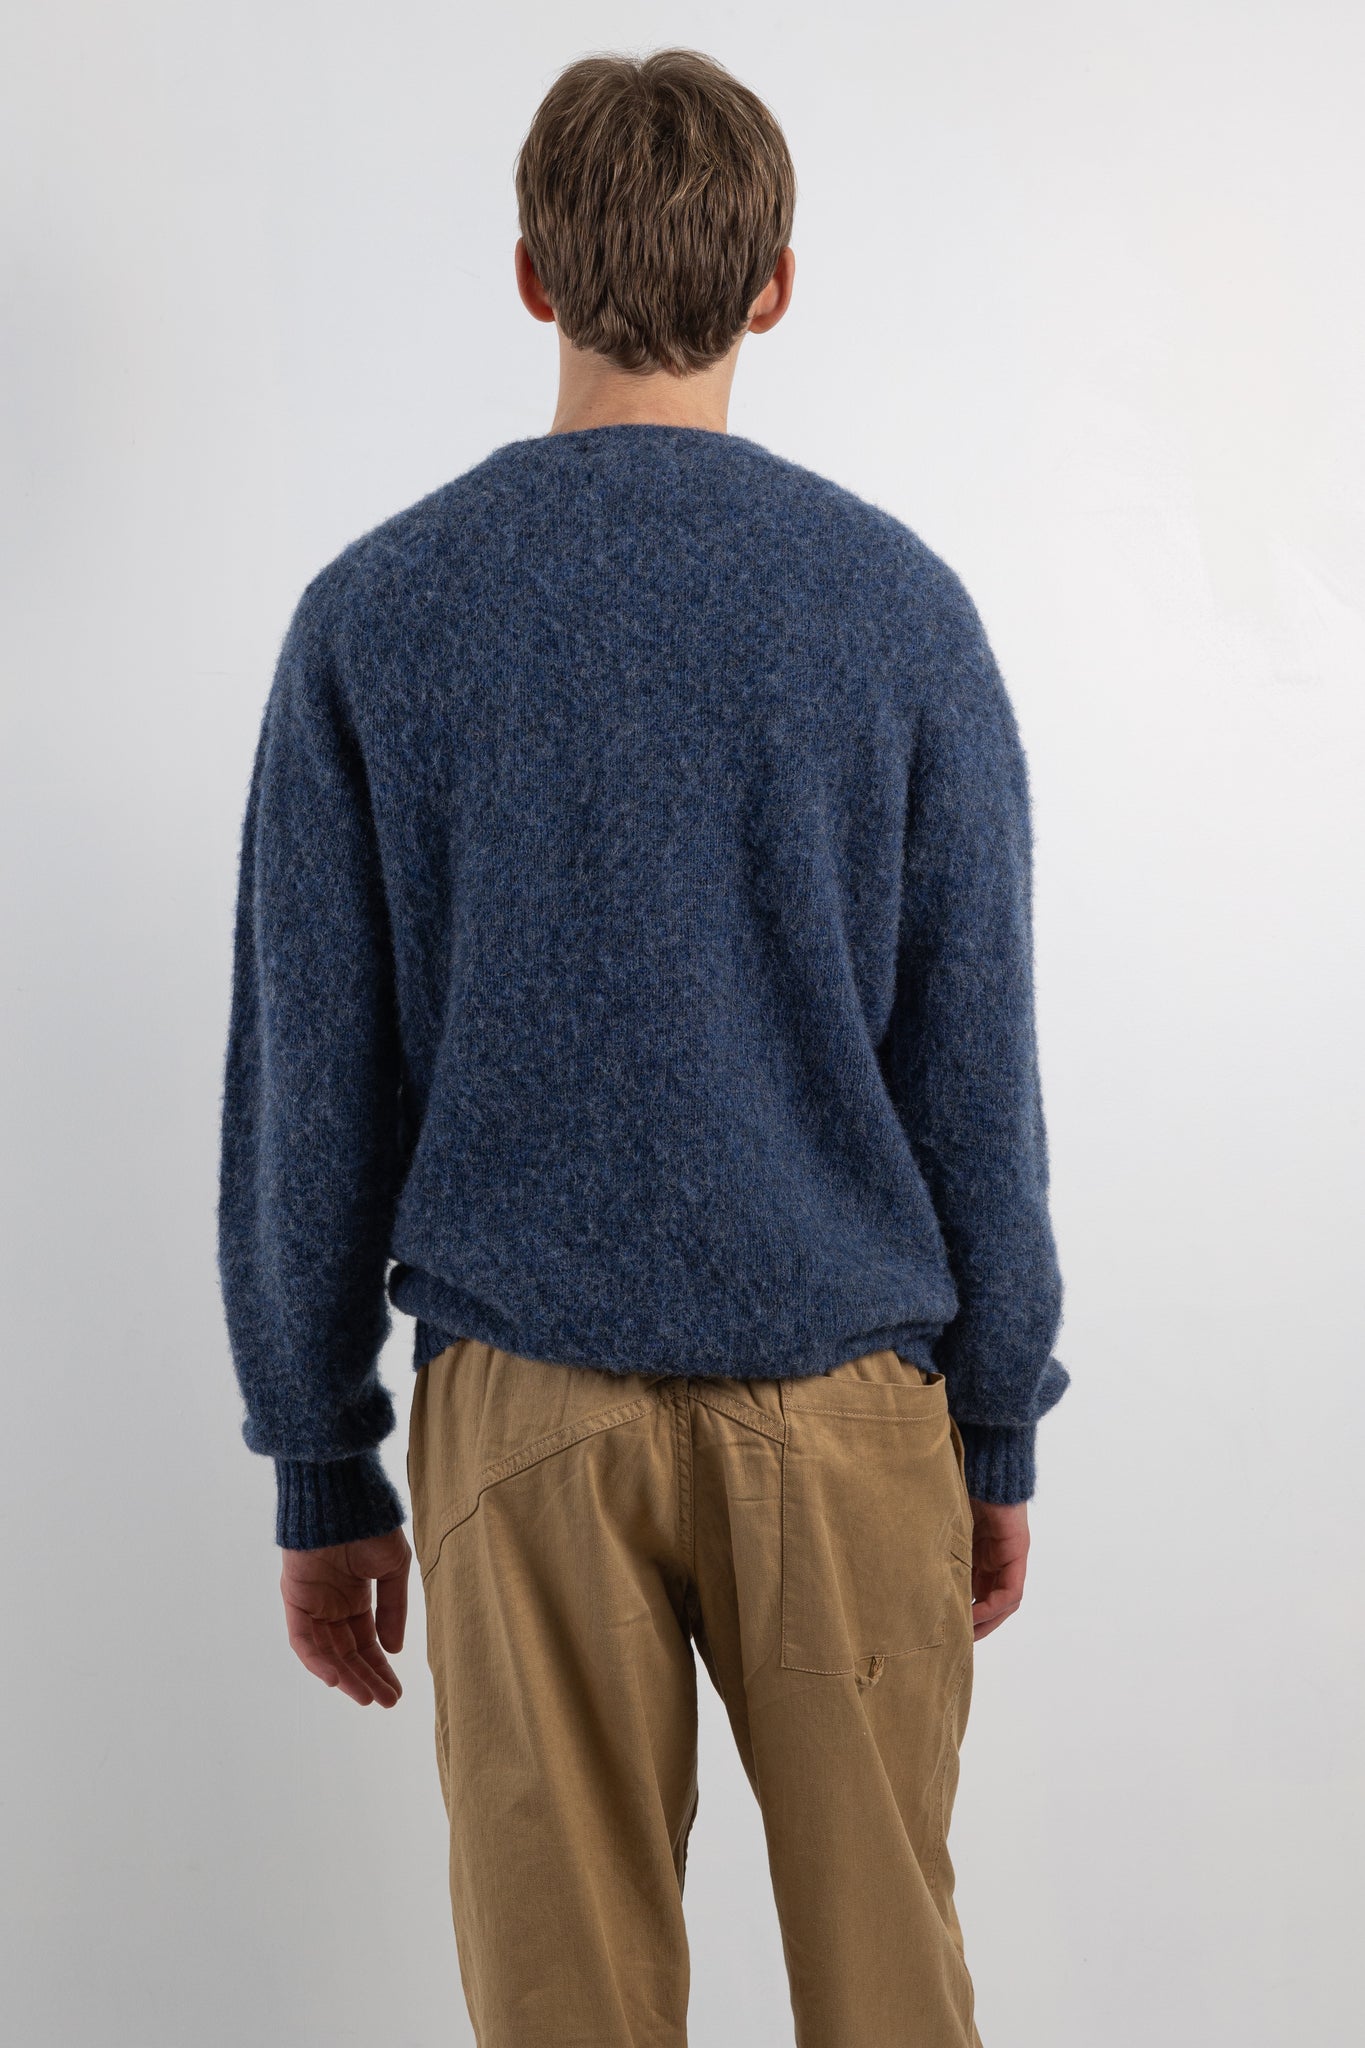 Suedehead crew neck knit blue